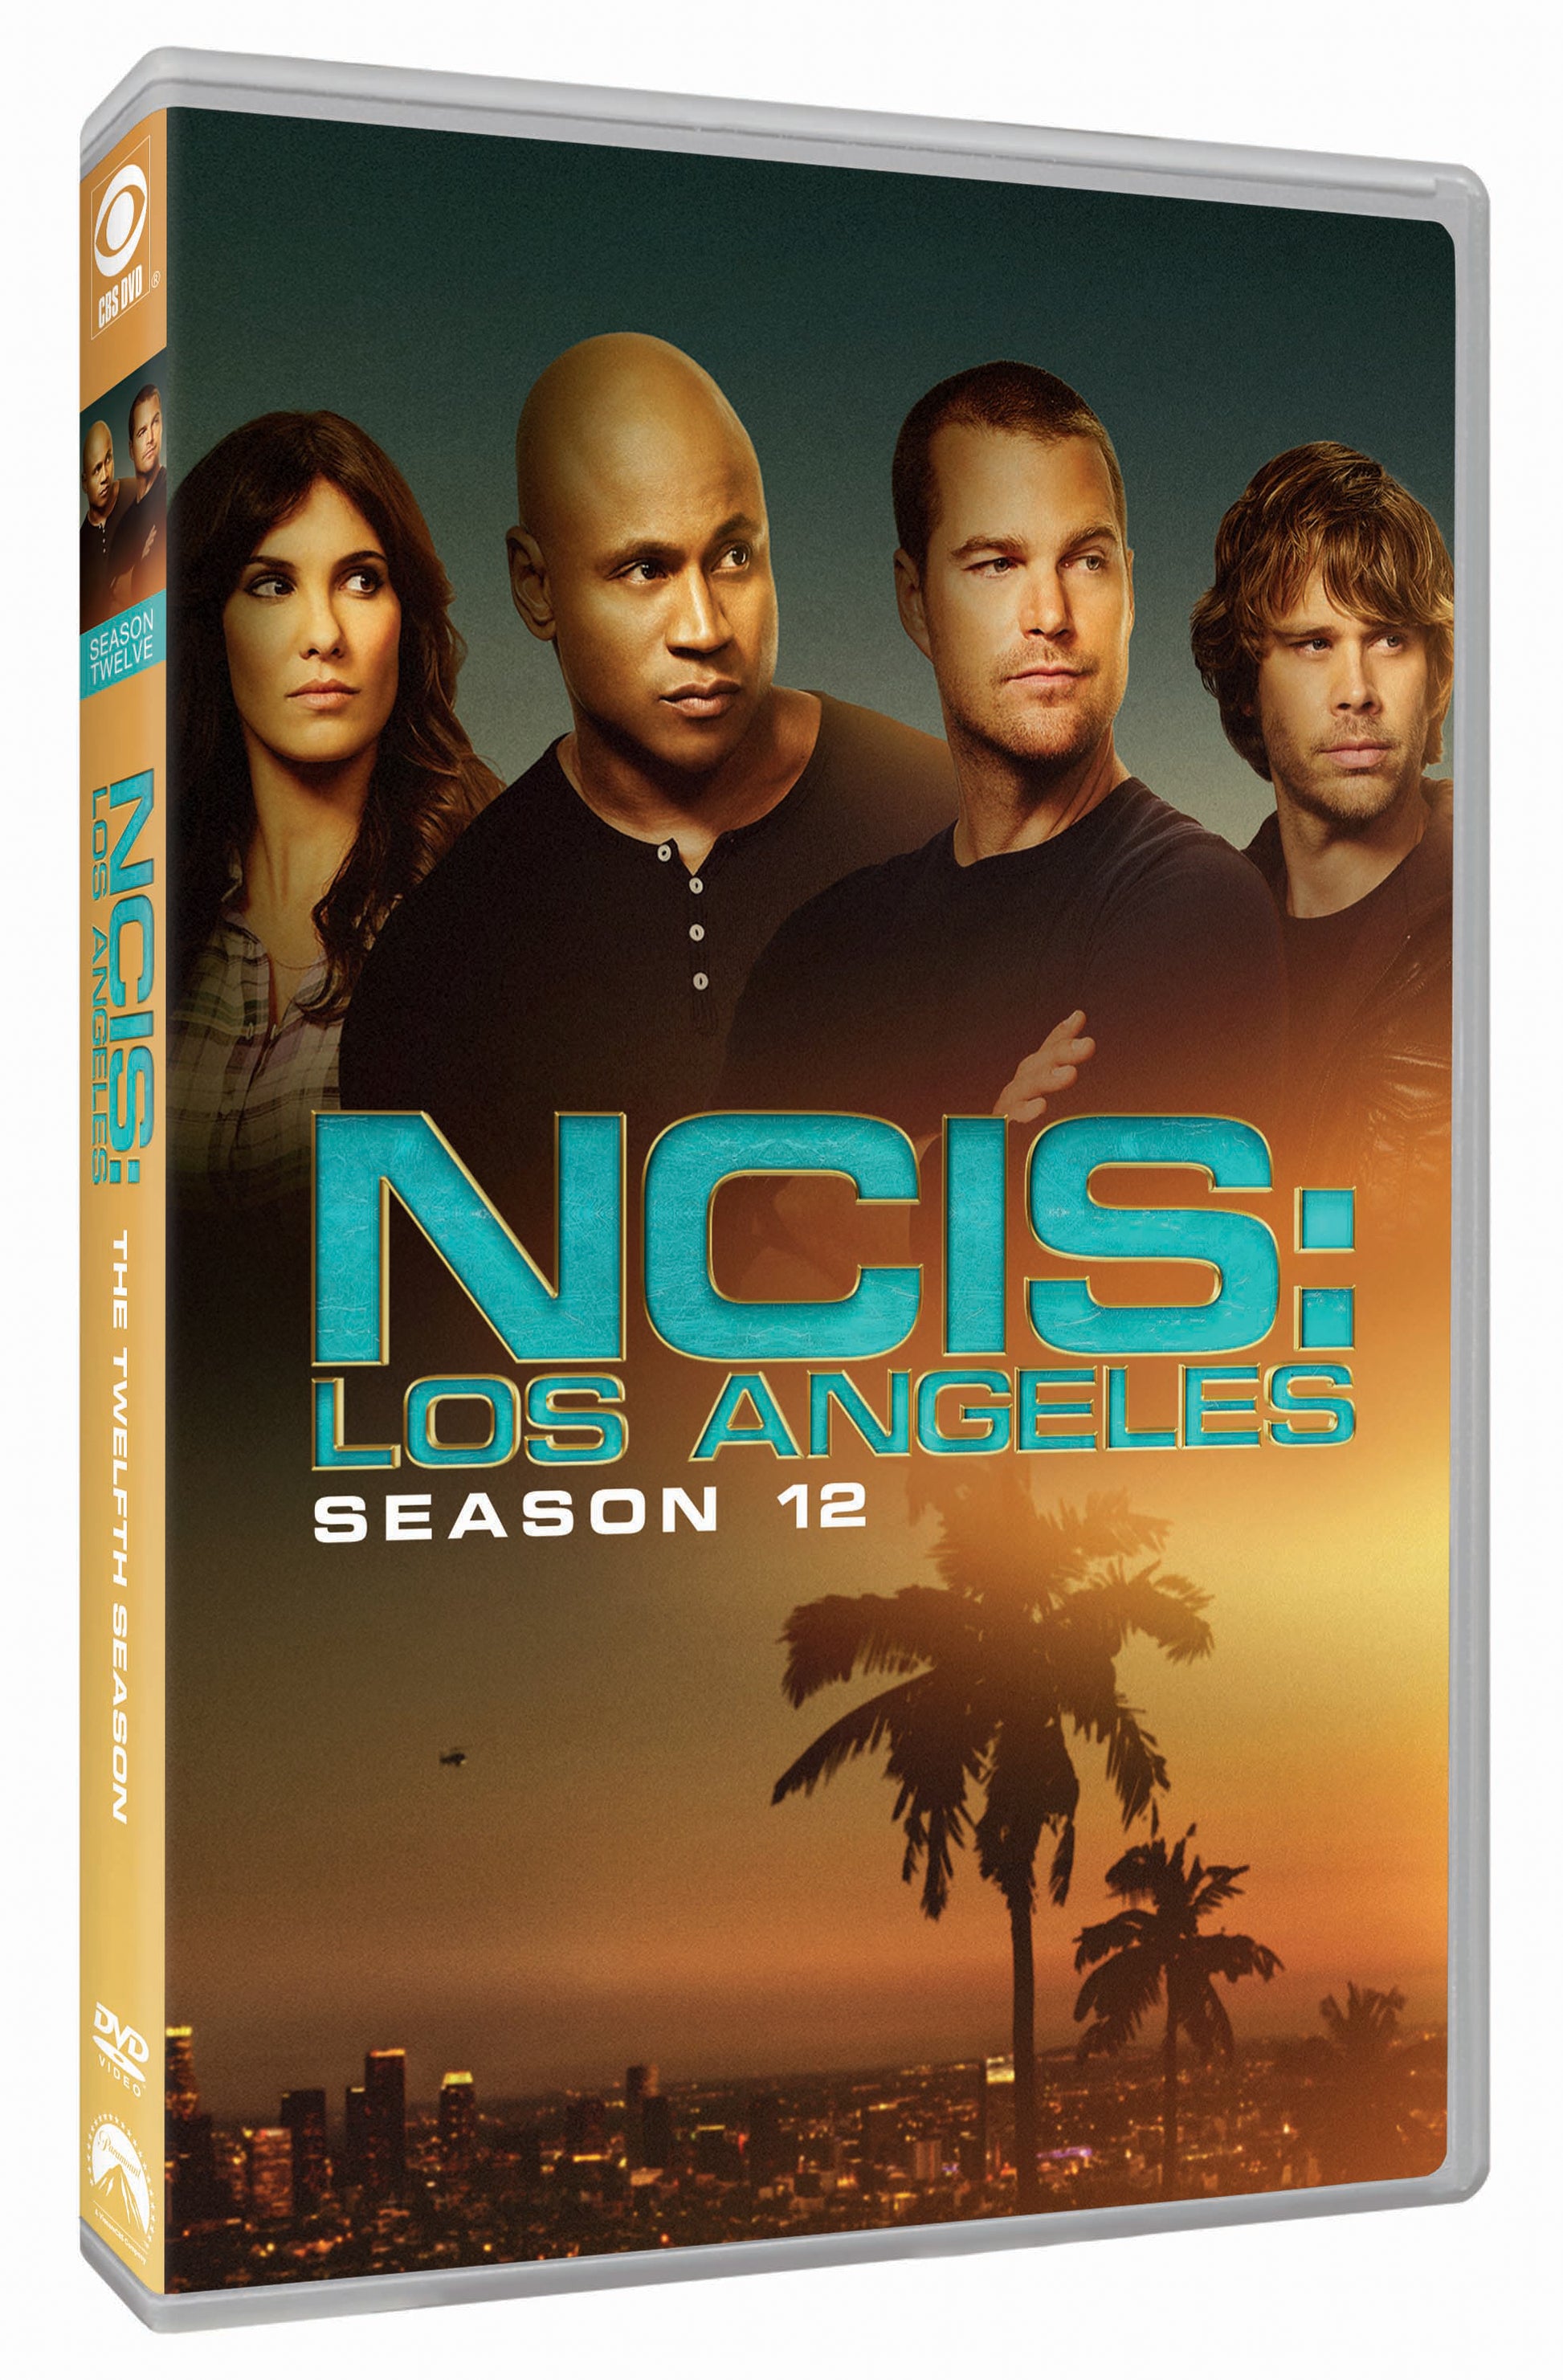 NCIS: Los Angeles - The Twelfth Season cover art